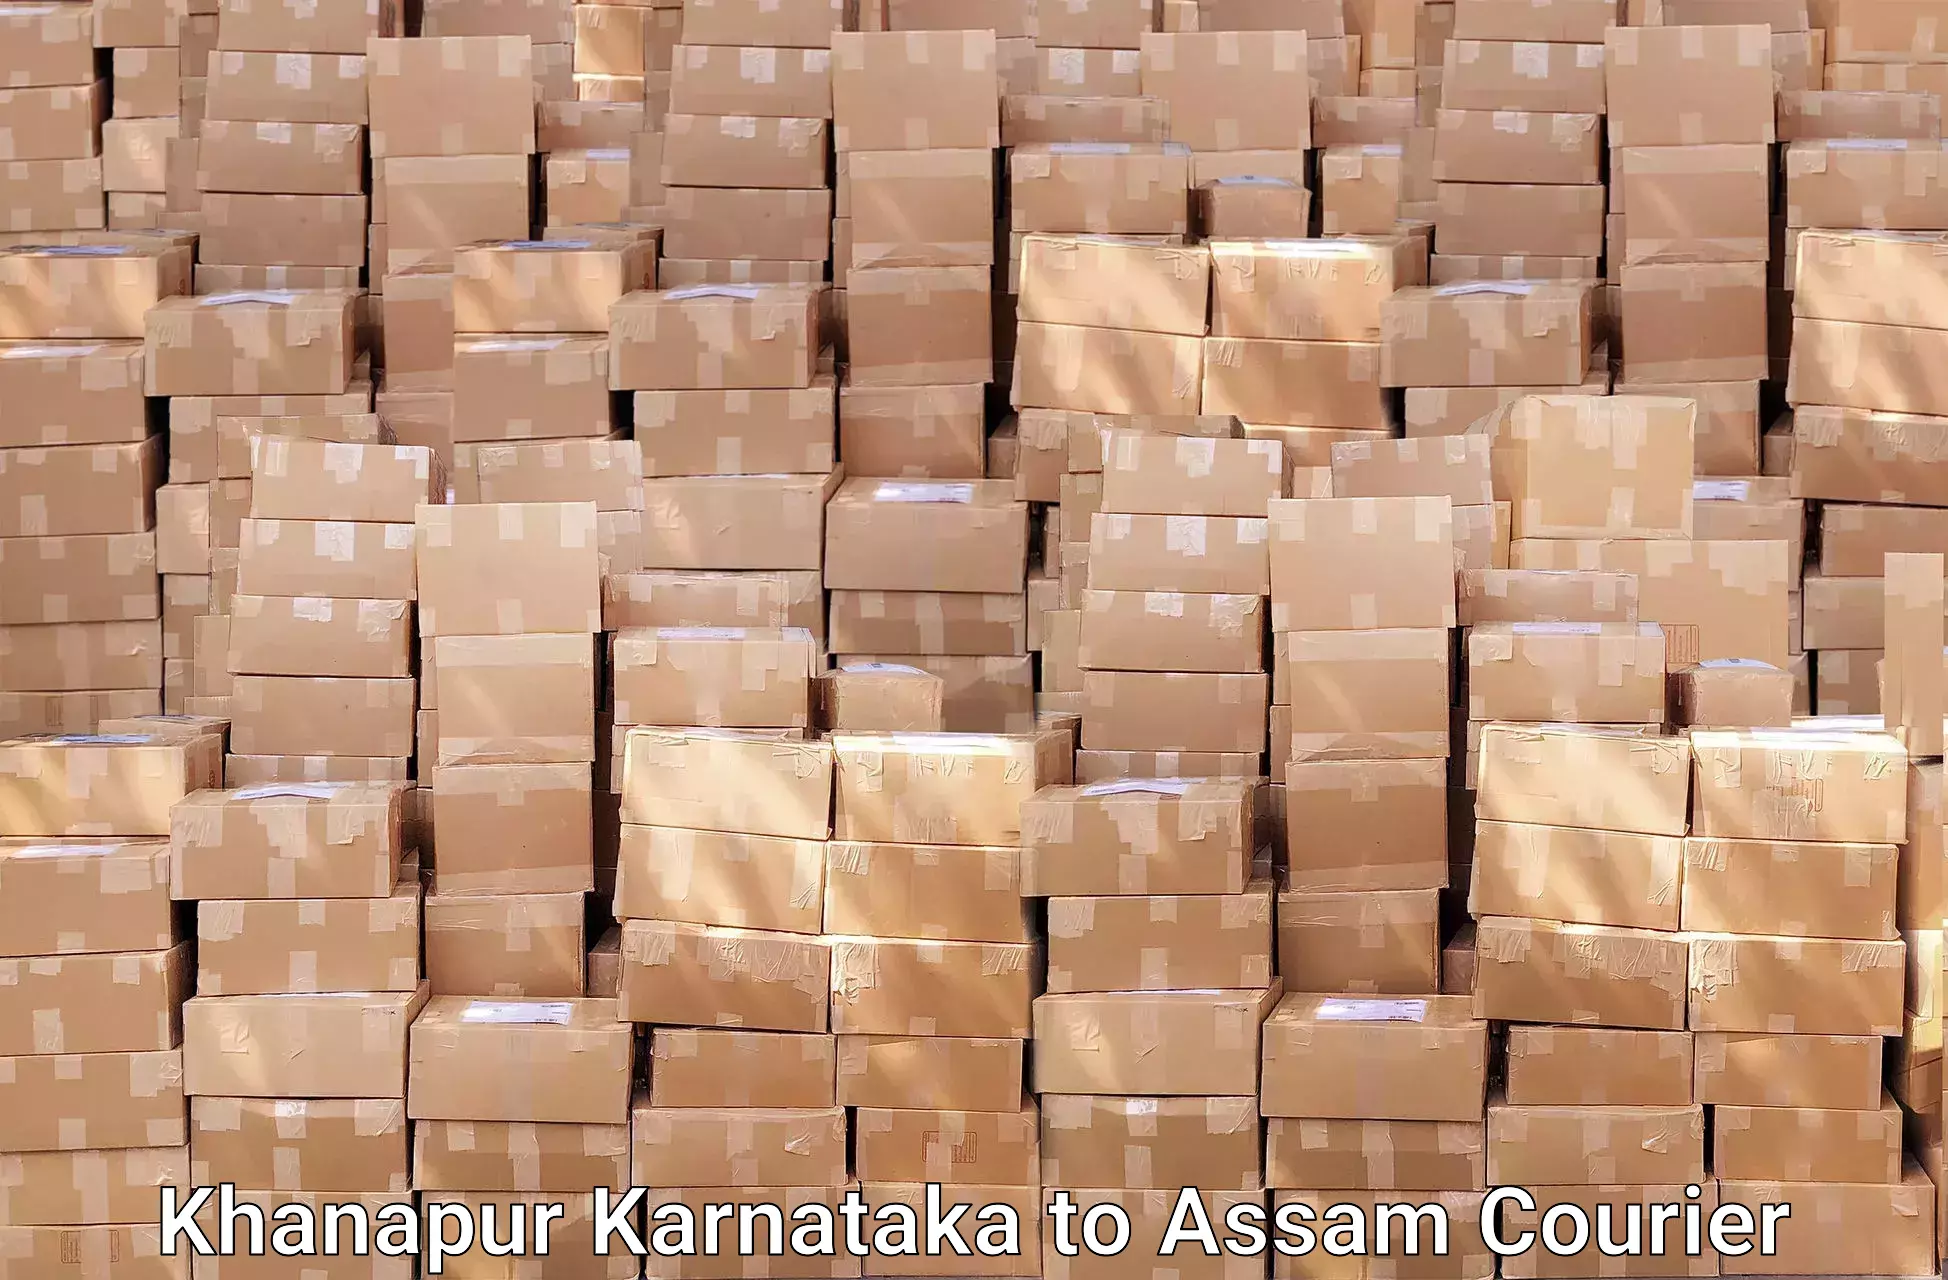 Quality moving and storage Khanapur Karnataka to Bongaigaon